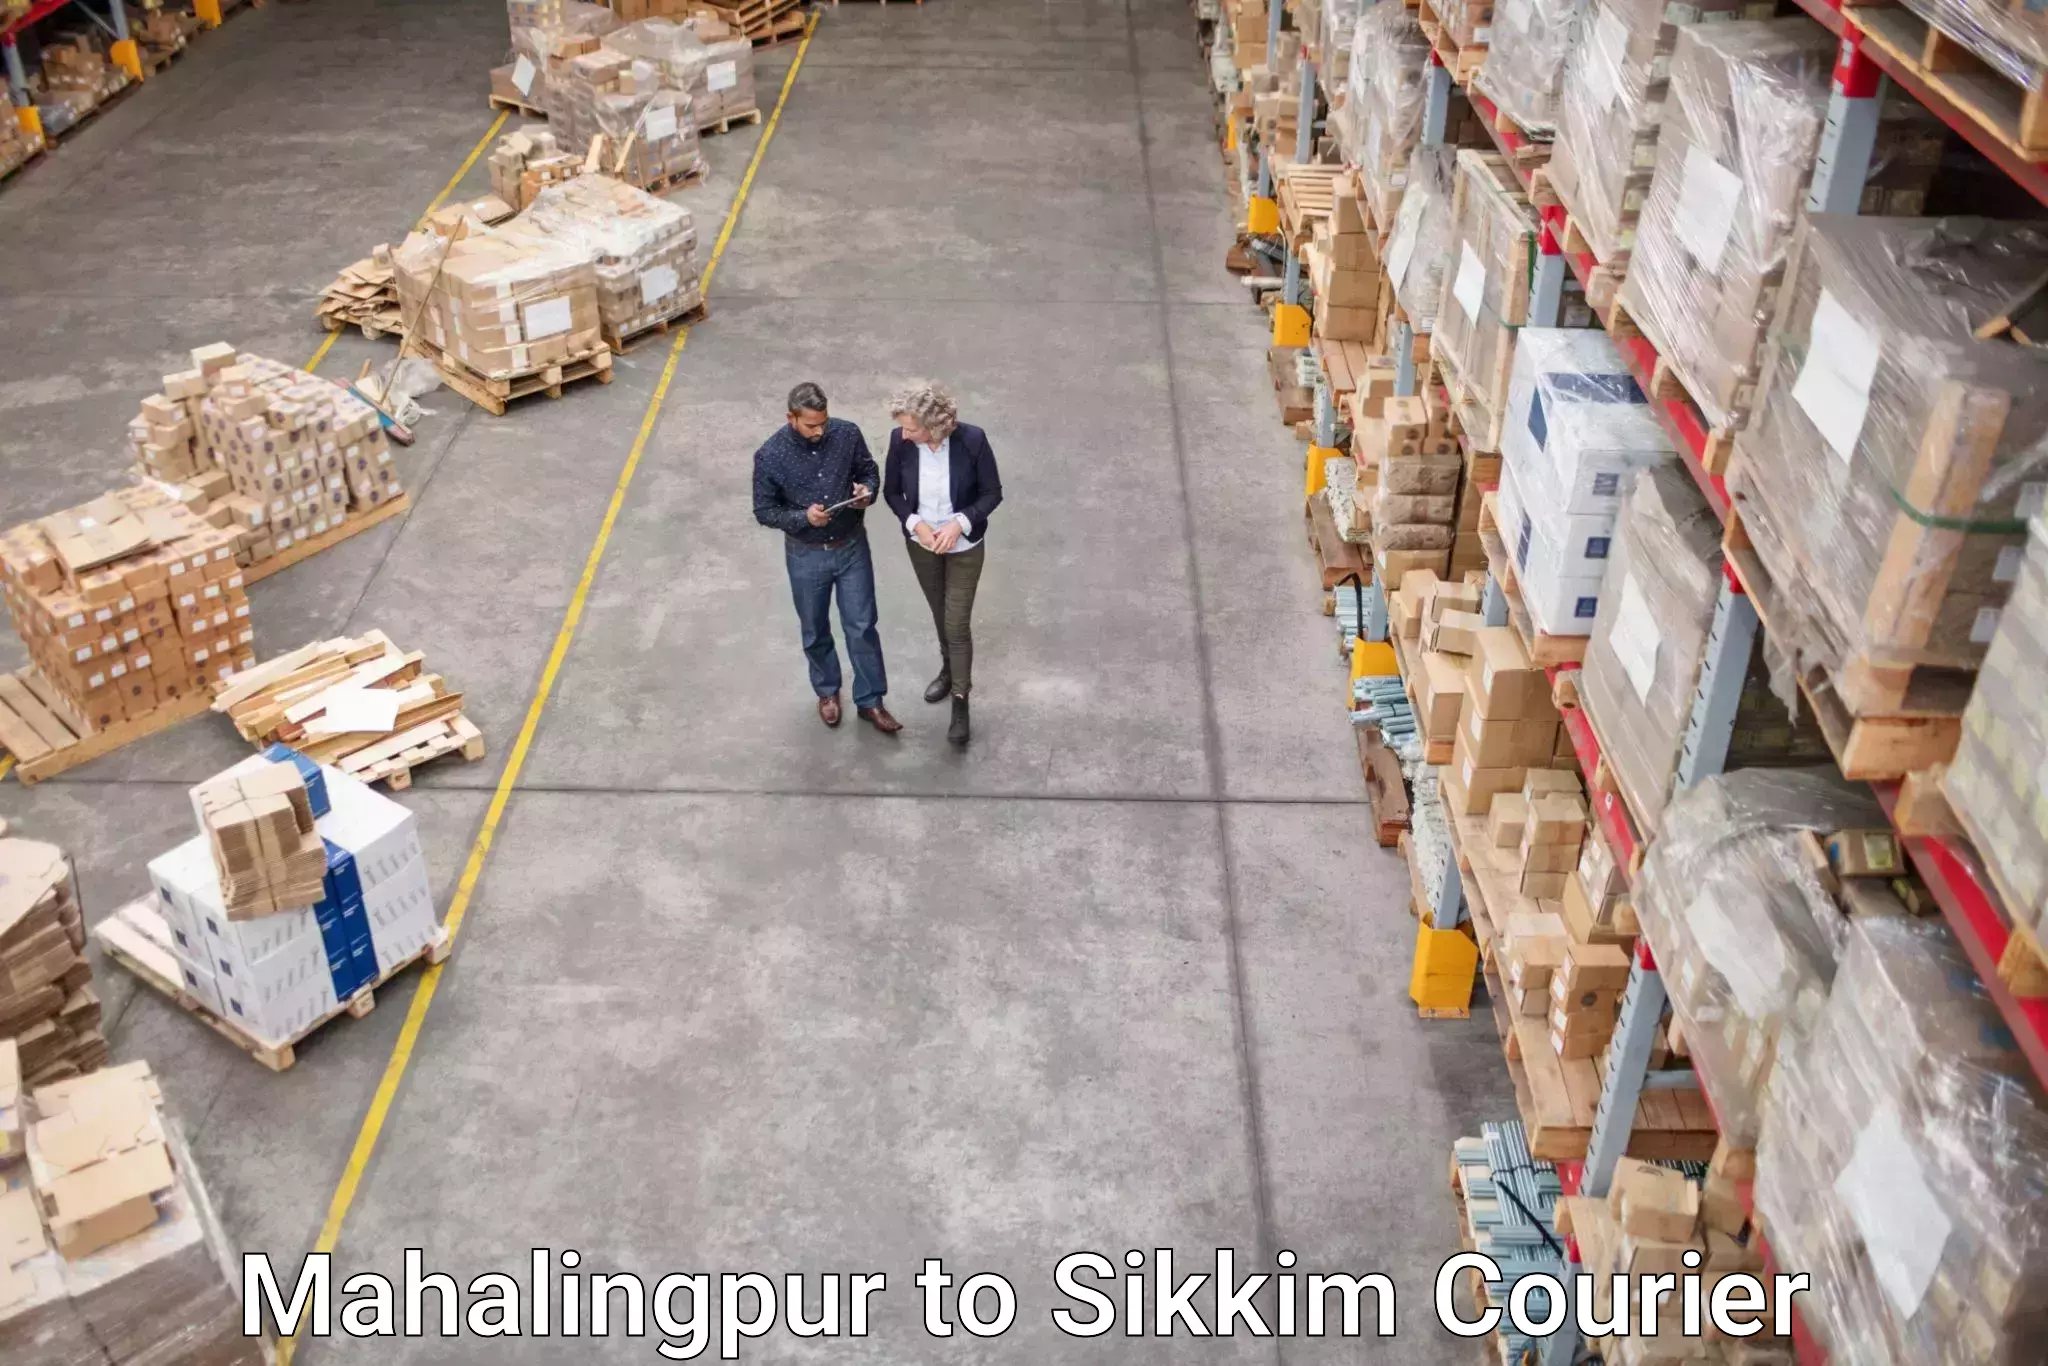 Cargo delivery service Mahalingpur to Rangpo